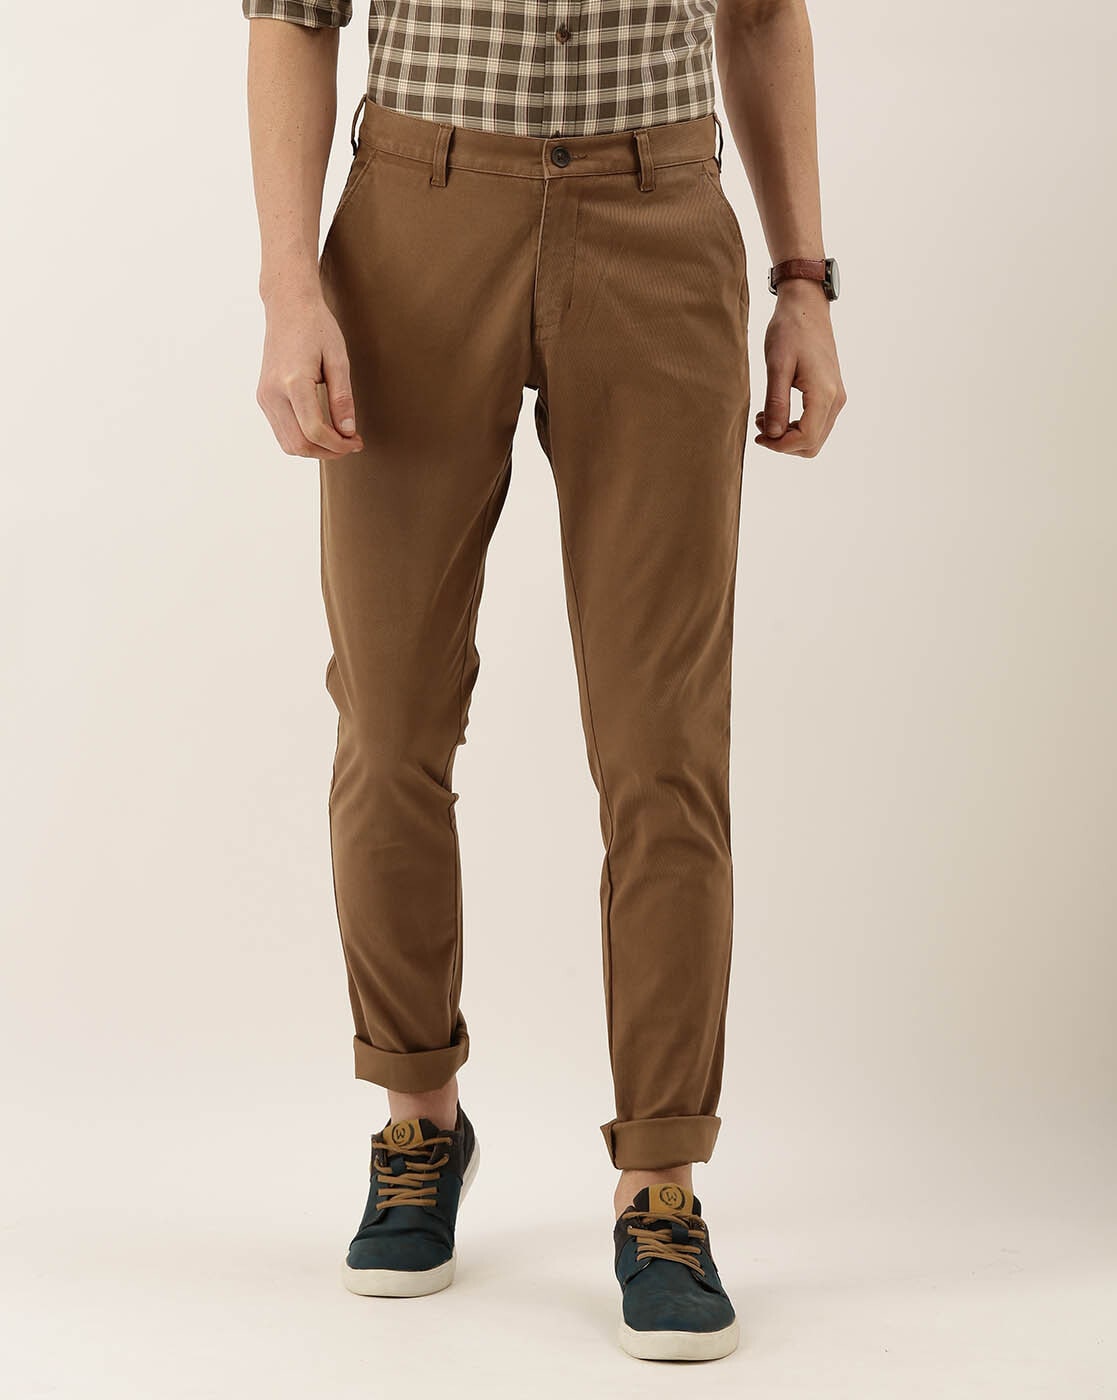 Buy Bronze Trousers  Pants for Men by Burnt Umber Online  Ajiocom